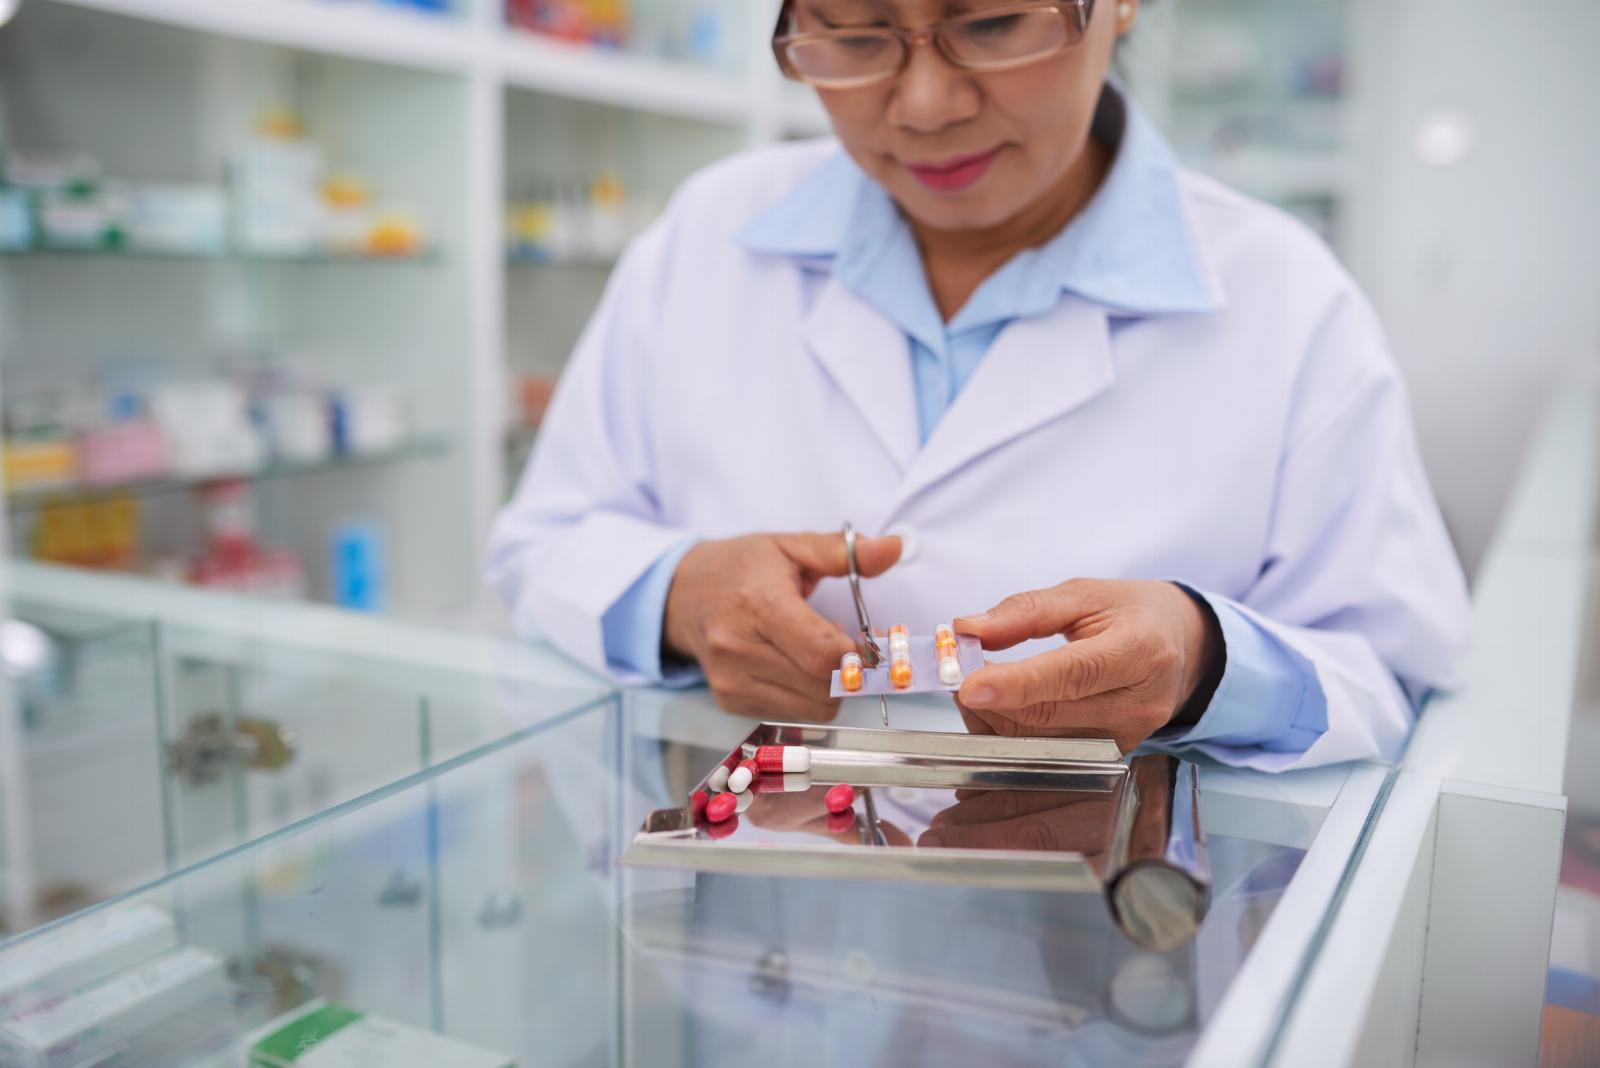 Medigo’s app makes prescription deliveries available 24/7 in Vietnam